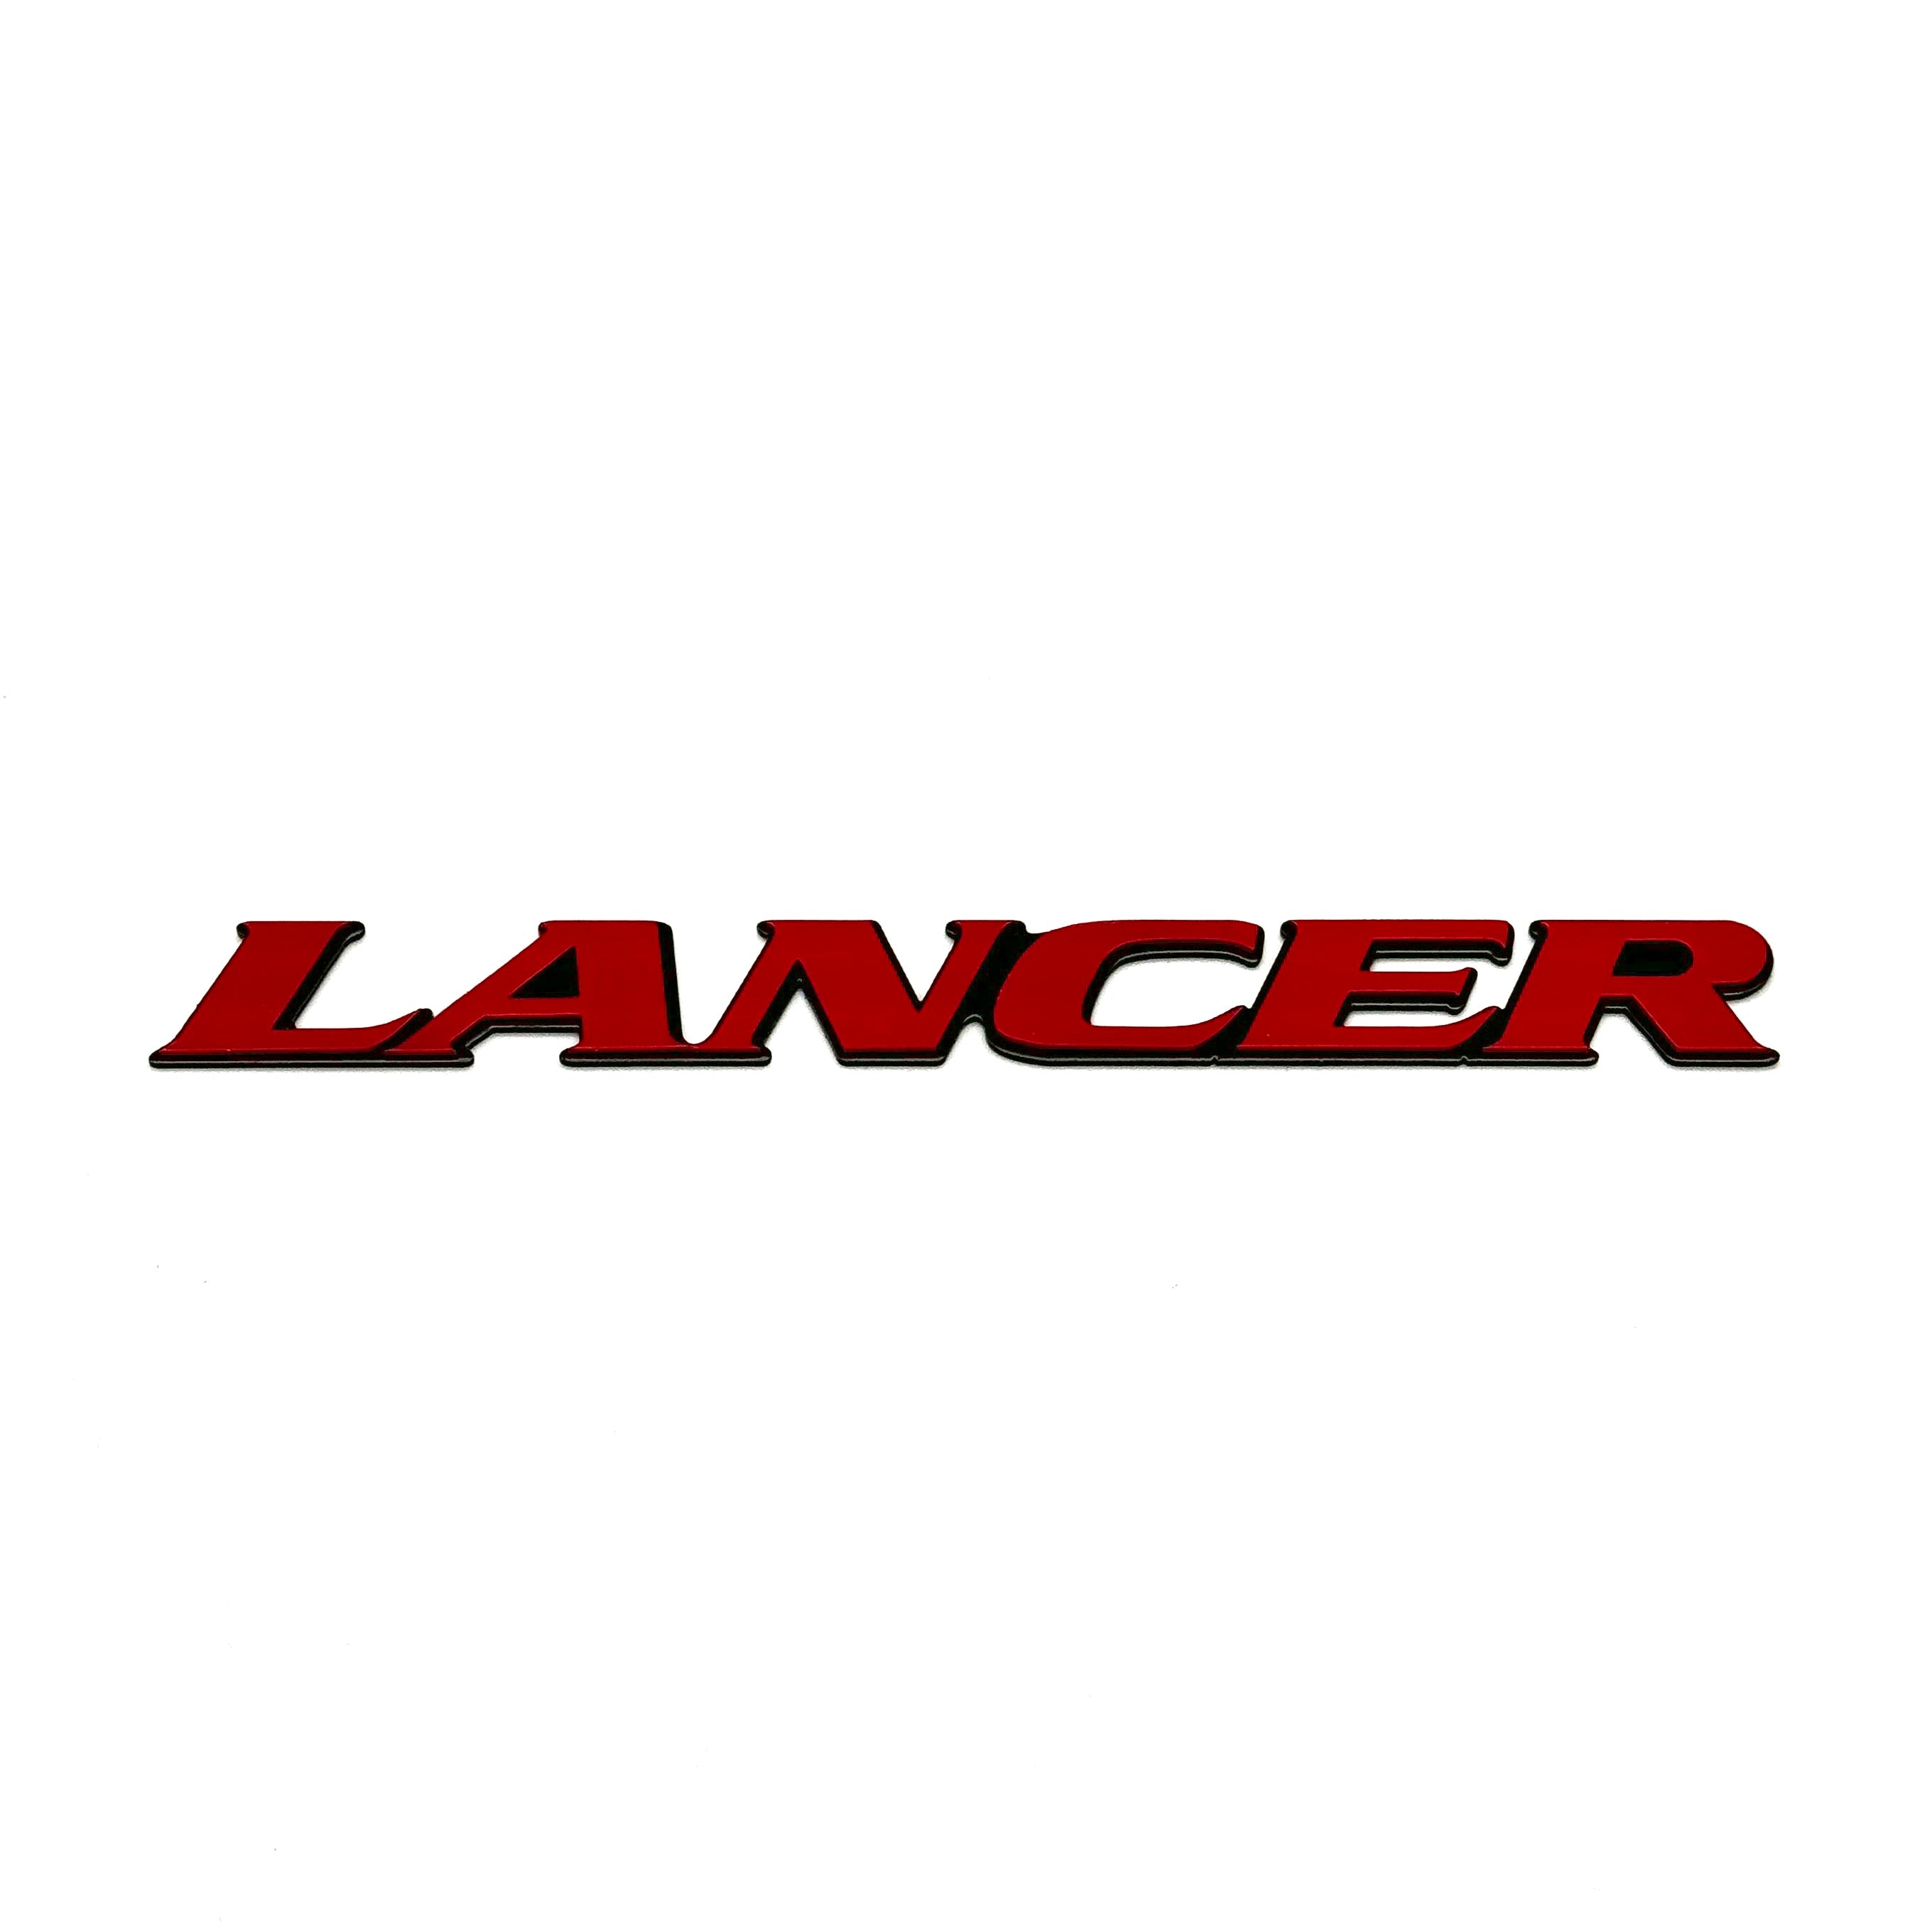 JDC Aluminum "Lancer" Trunk Badge (Evo 4/5/6/Universal)